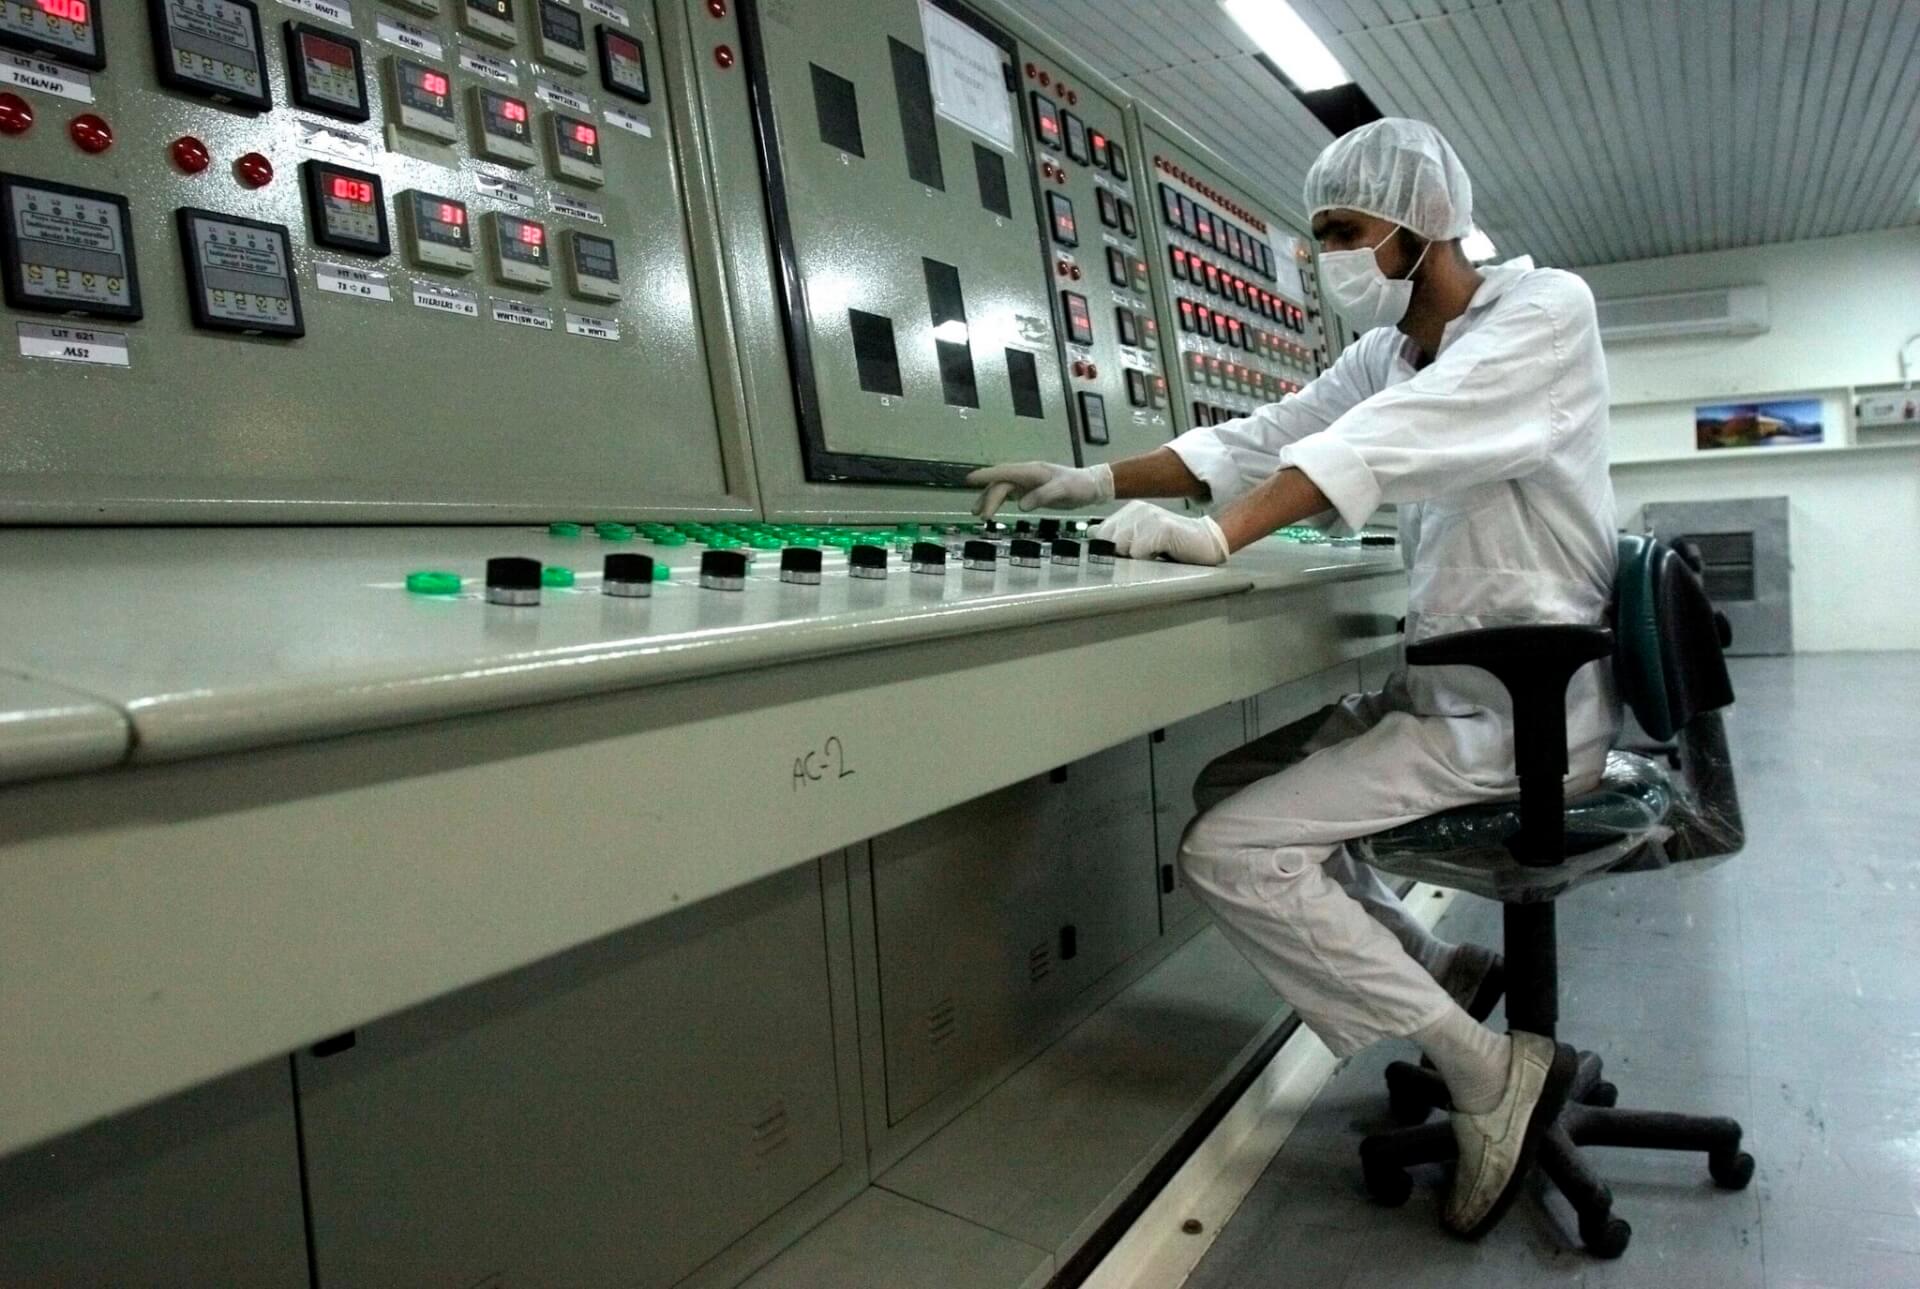 Iran Begins Developing Uranium Metal for Reactor Fuel